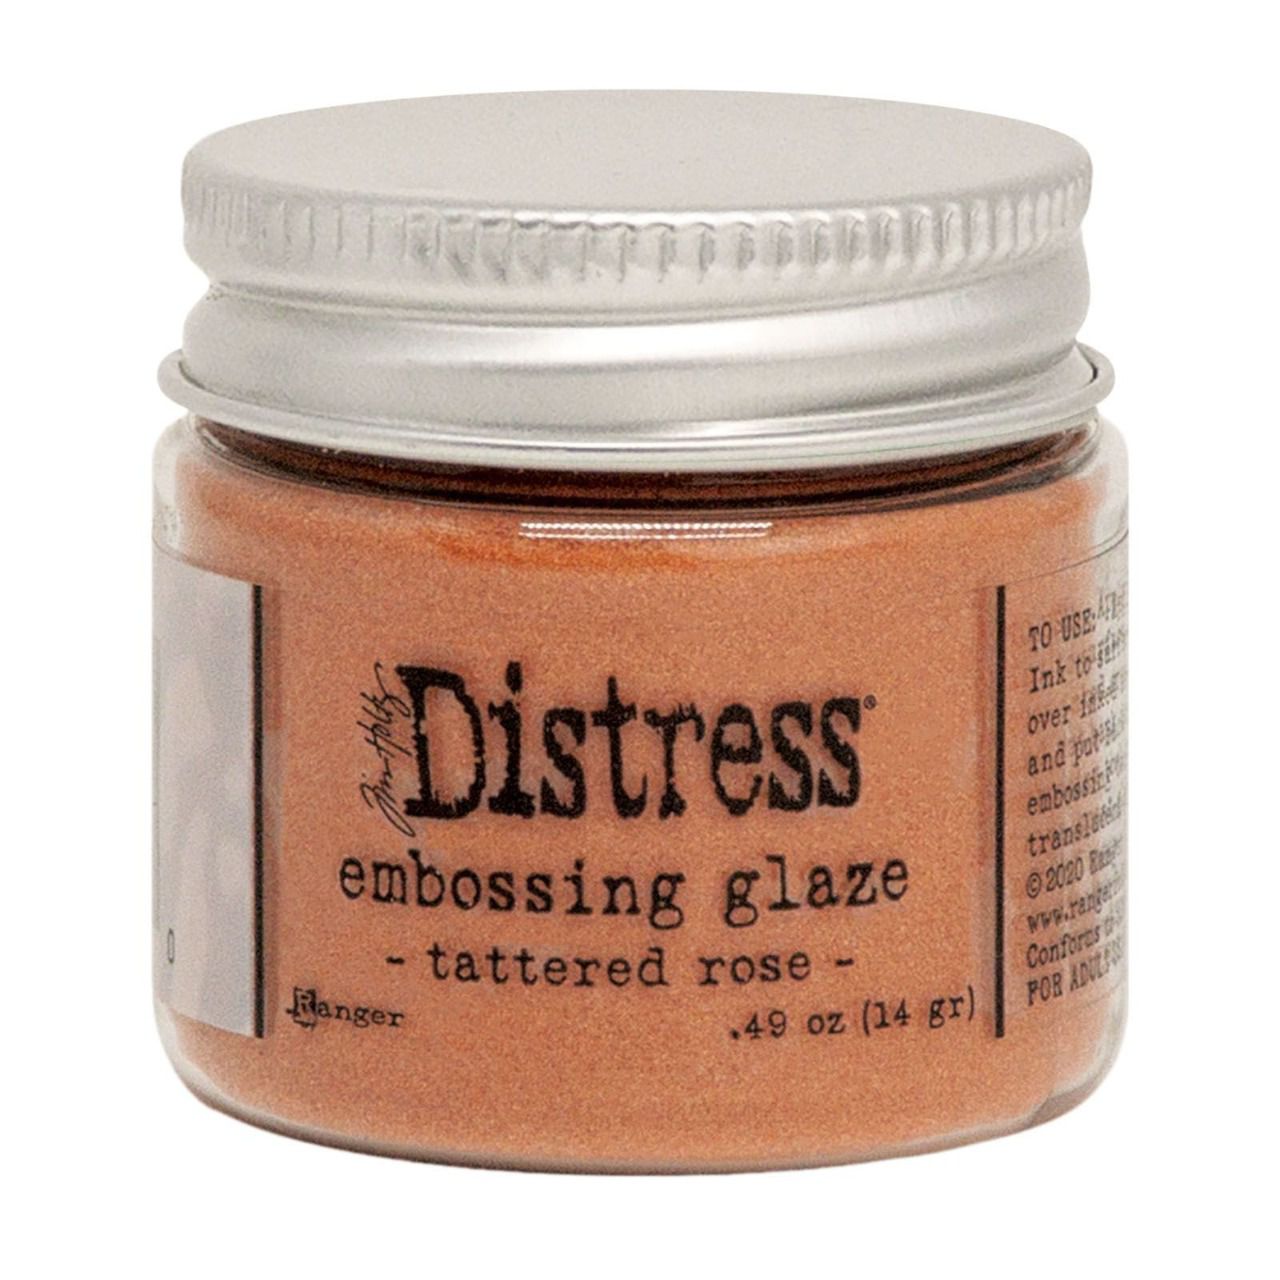 Distress Embossing glaze, Tim Holtz, couleur : Tattered rose